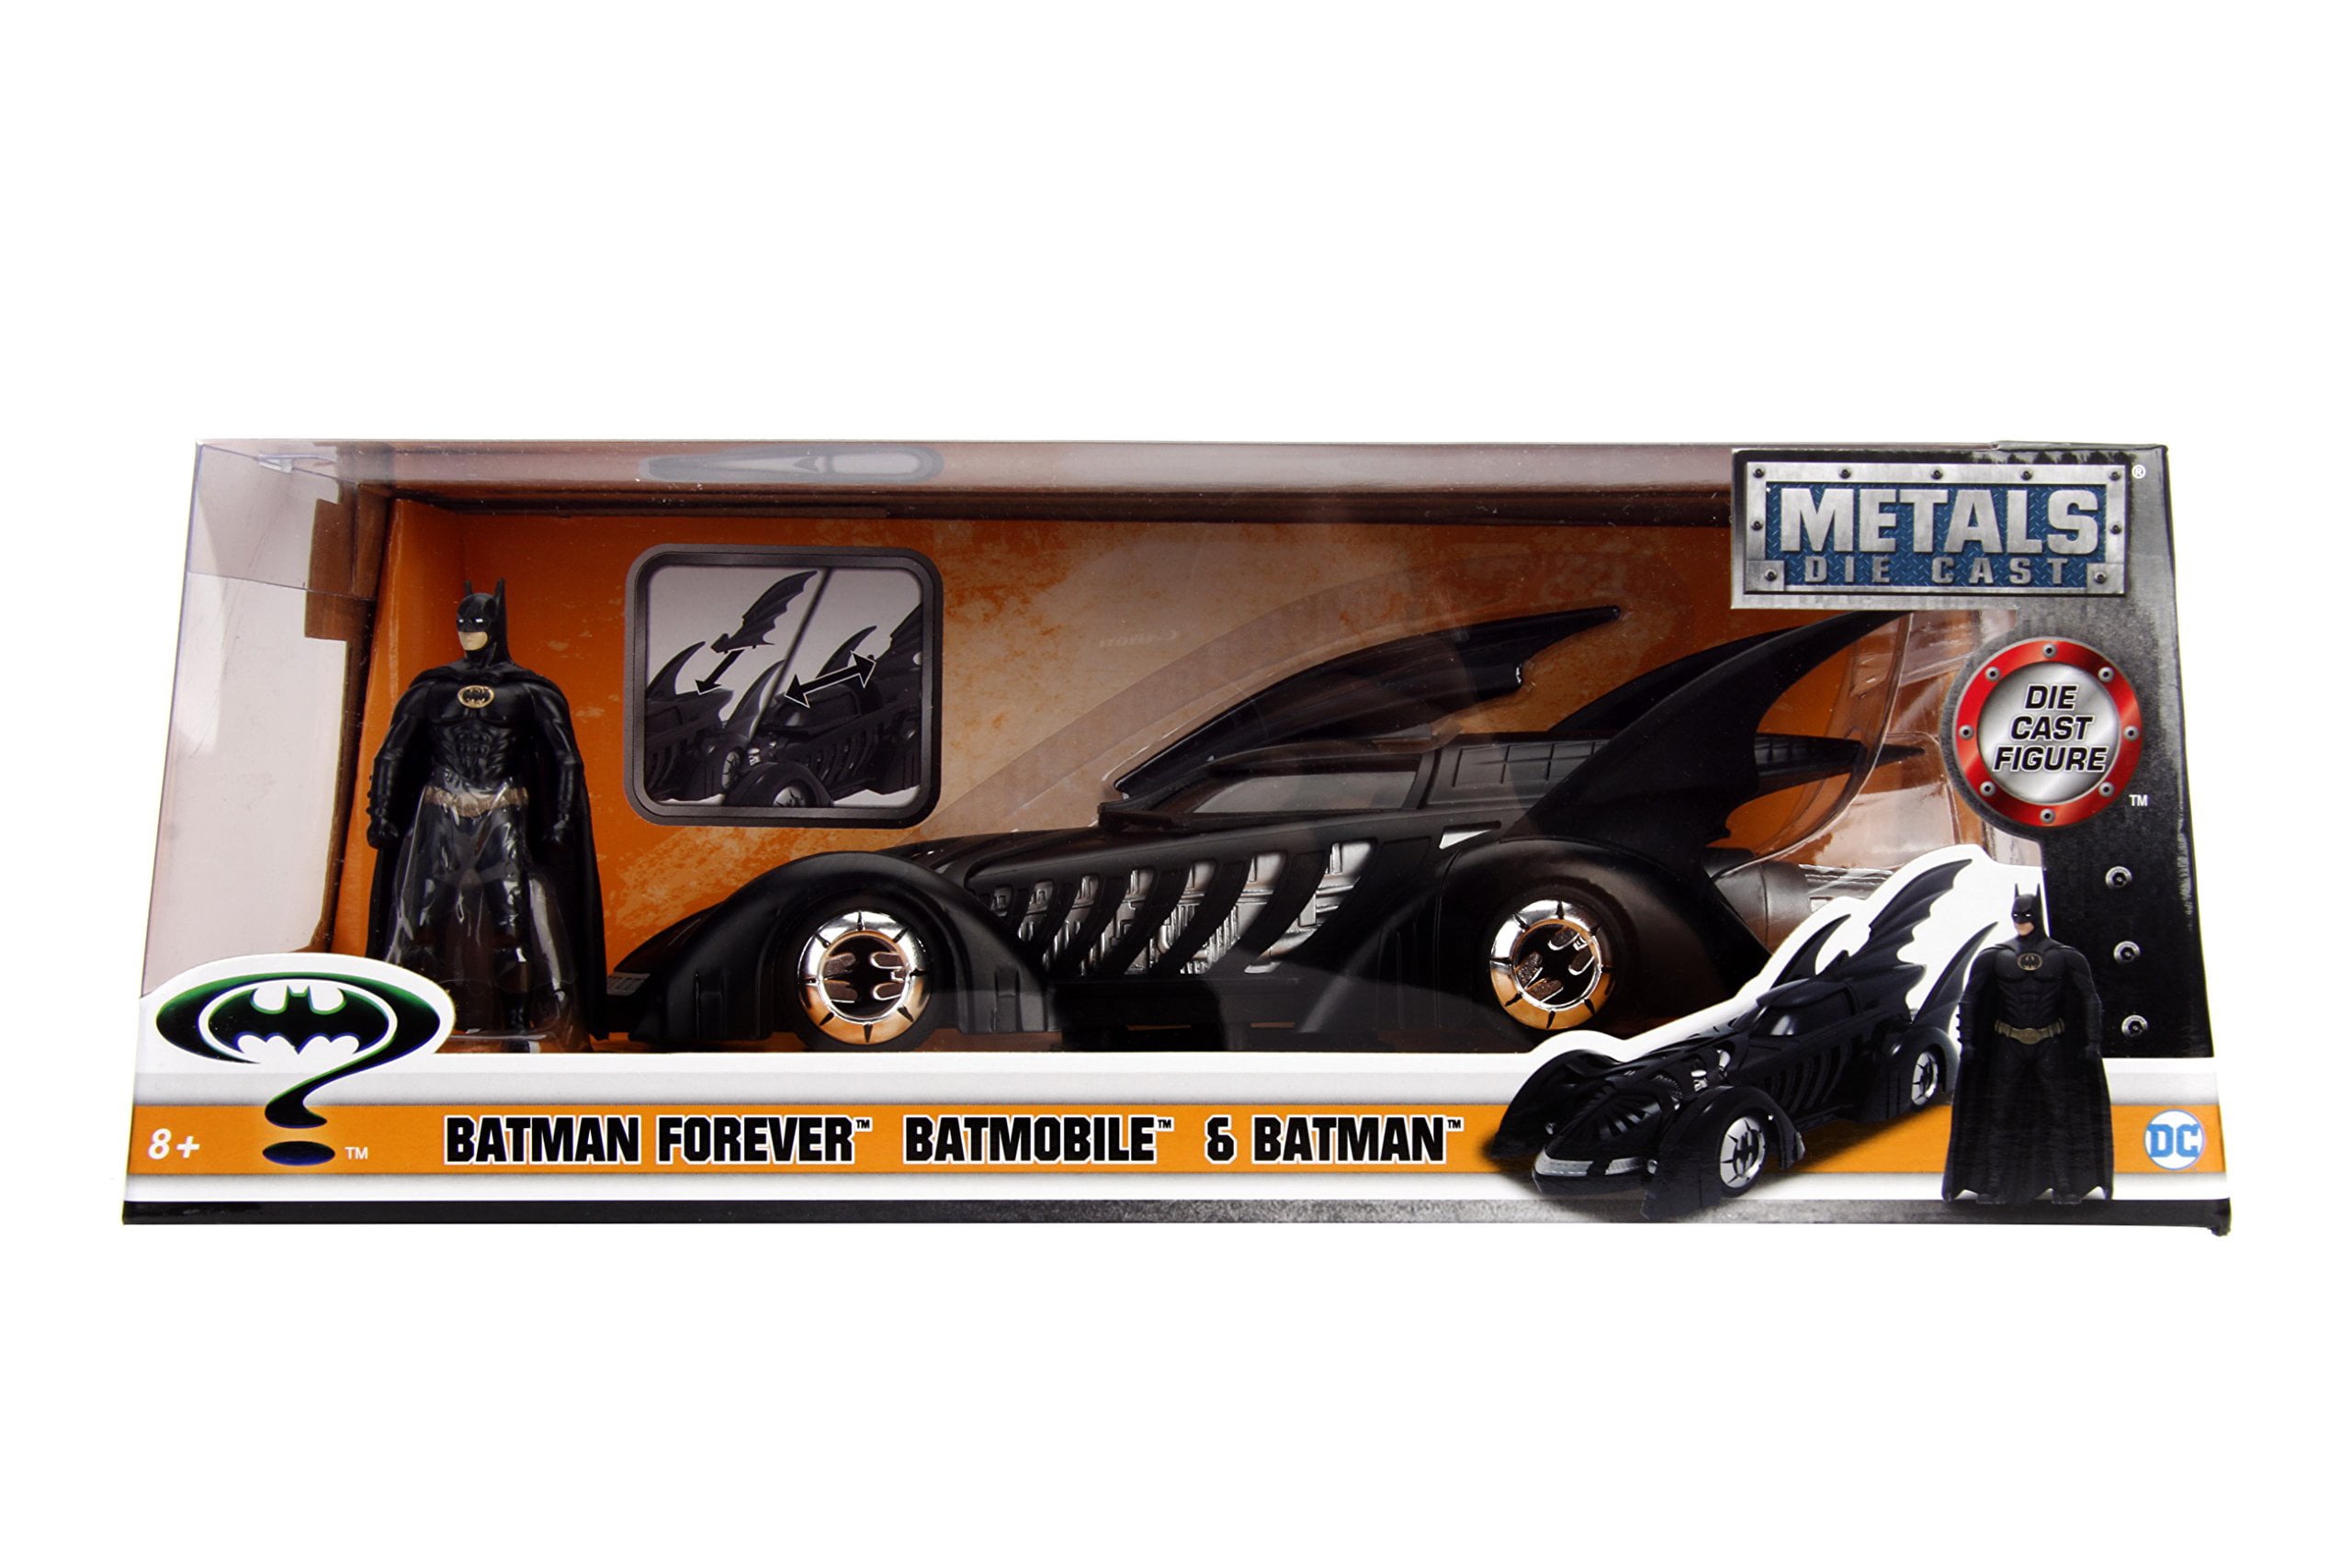 Acheter Batman Batmobile Voiture en métal 1:24 Batman Forever avec